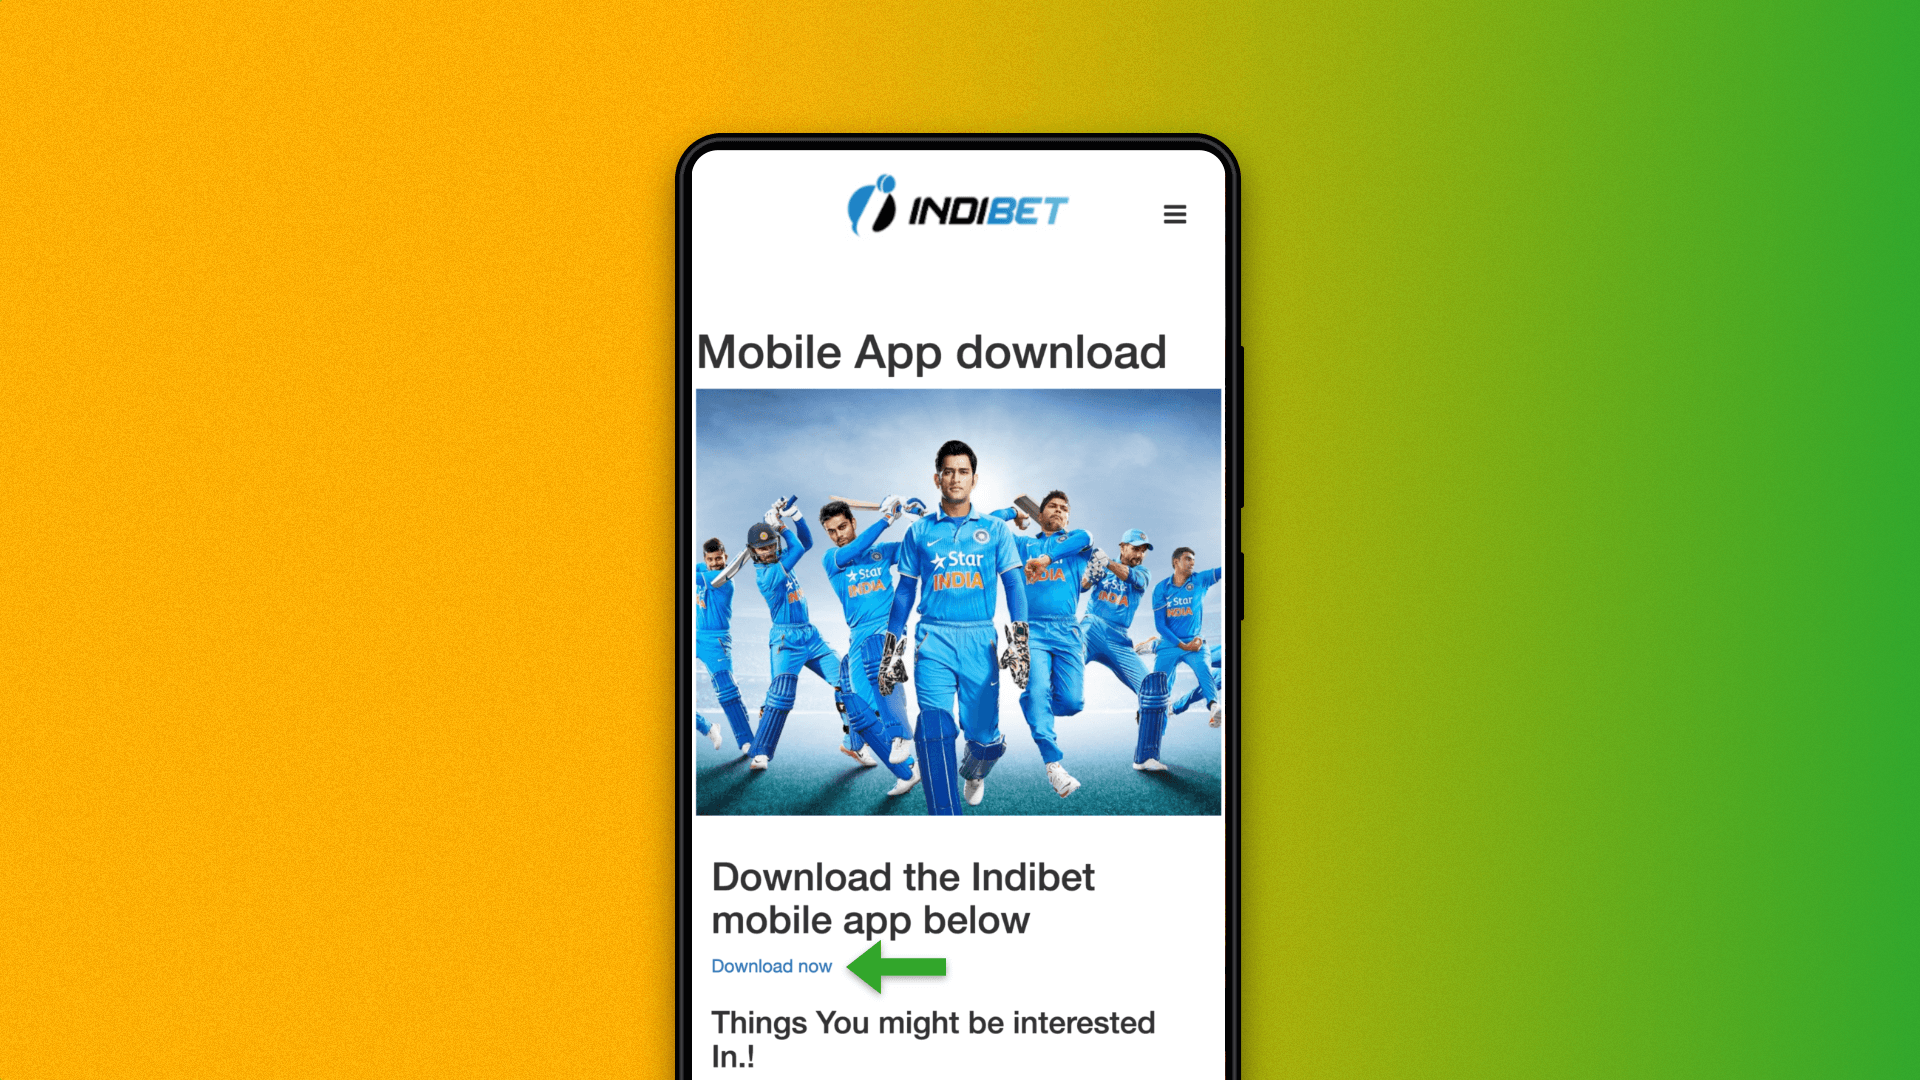 Indibet mobile app page